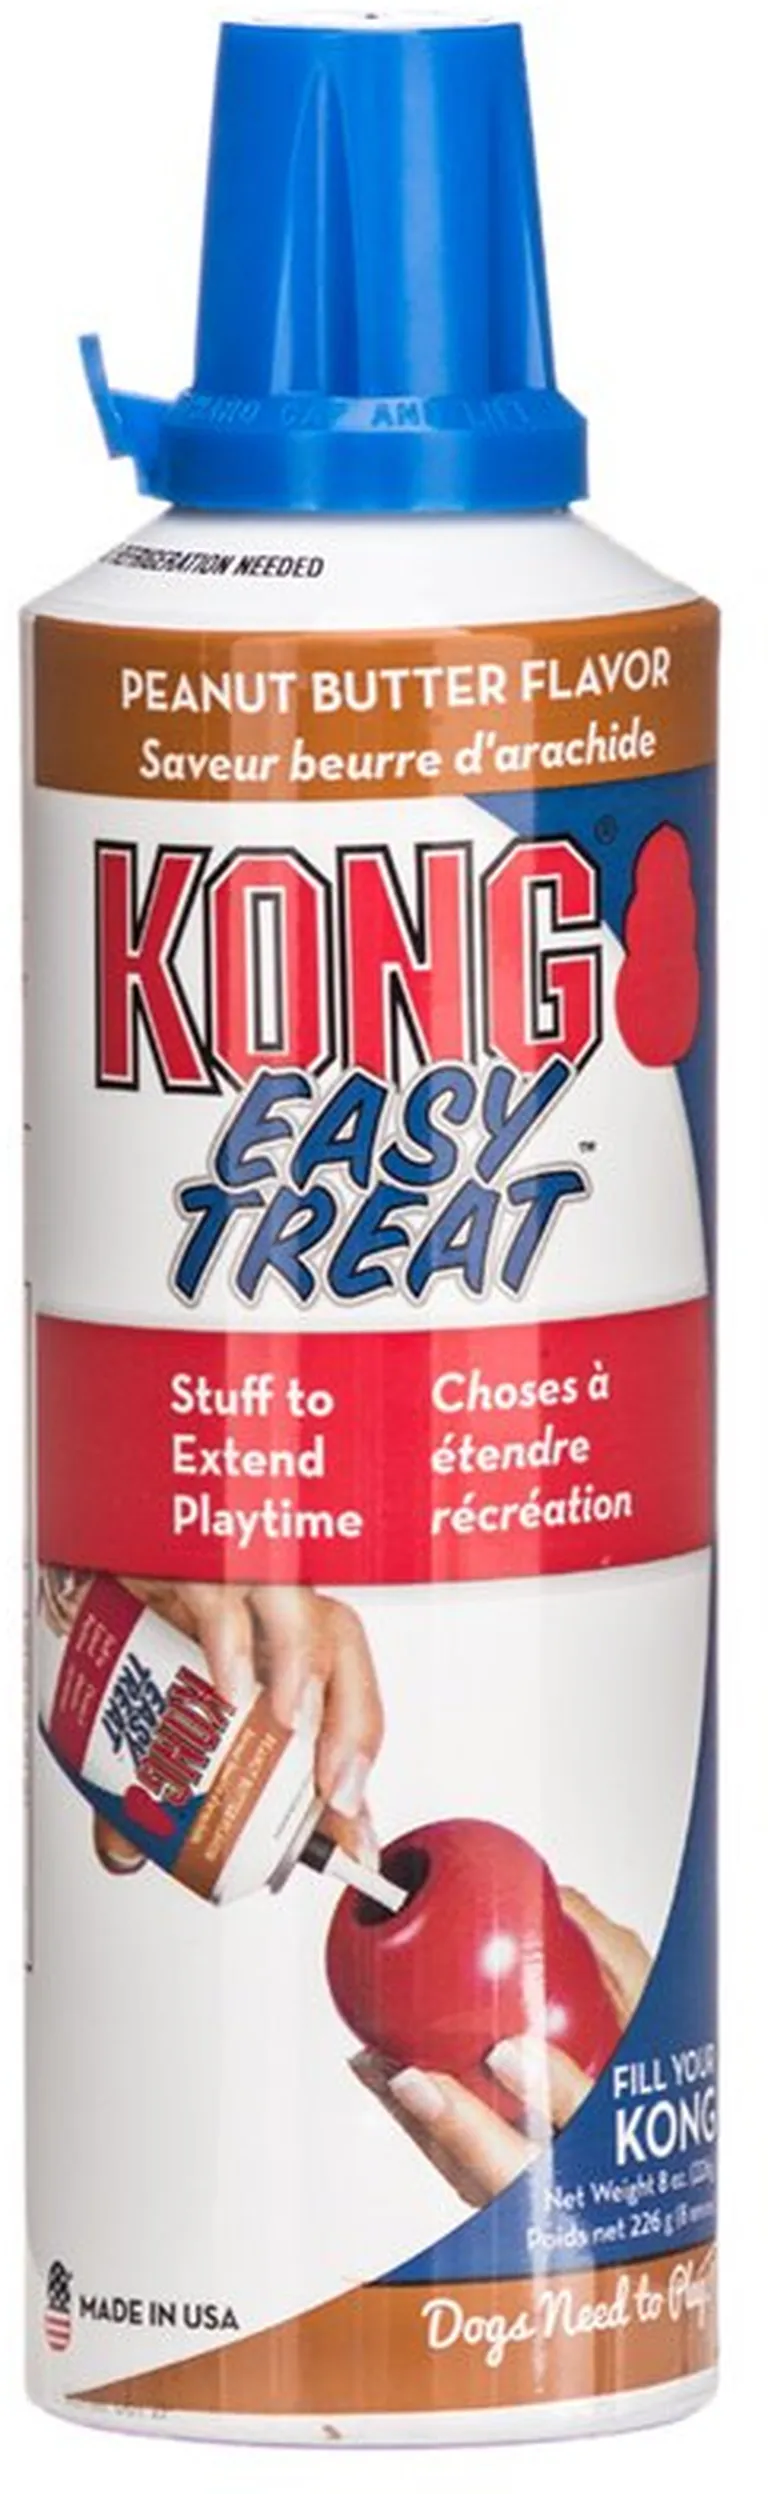 Kong Stuff'n Easy Treat - Peanut Butter Recipe Photo 1